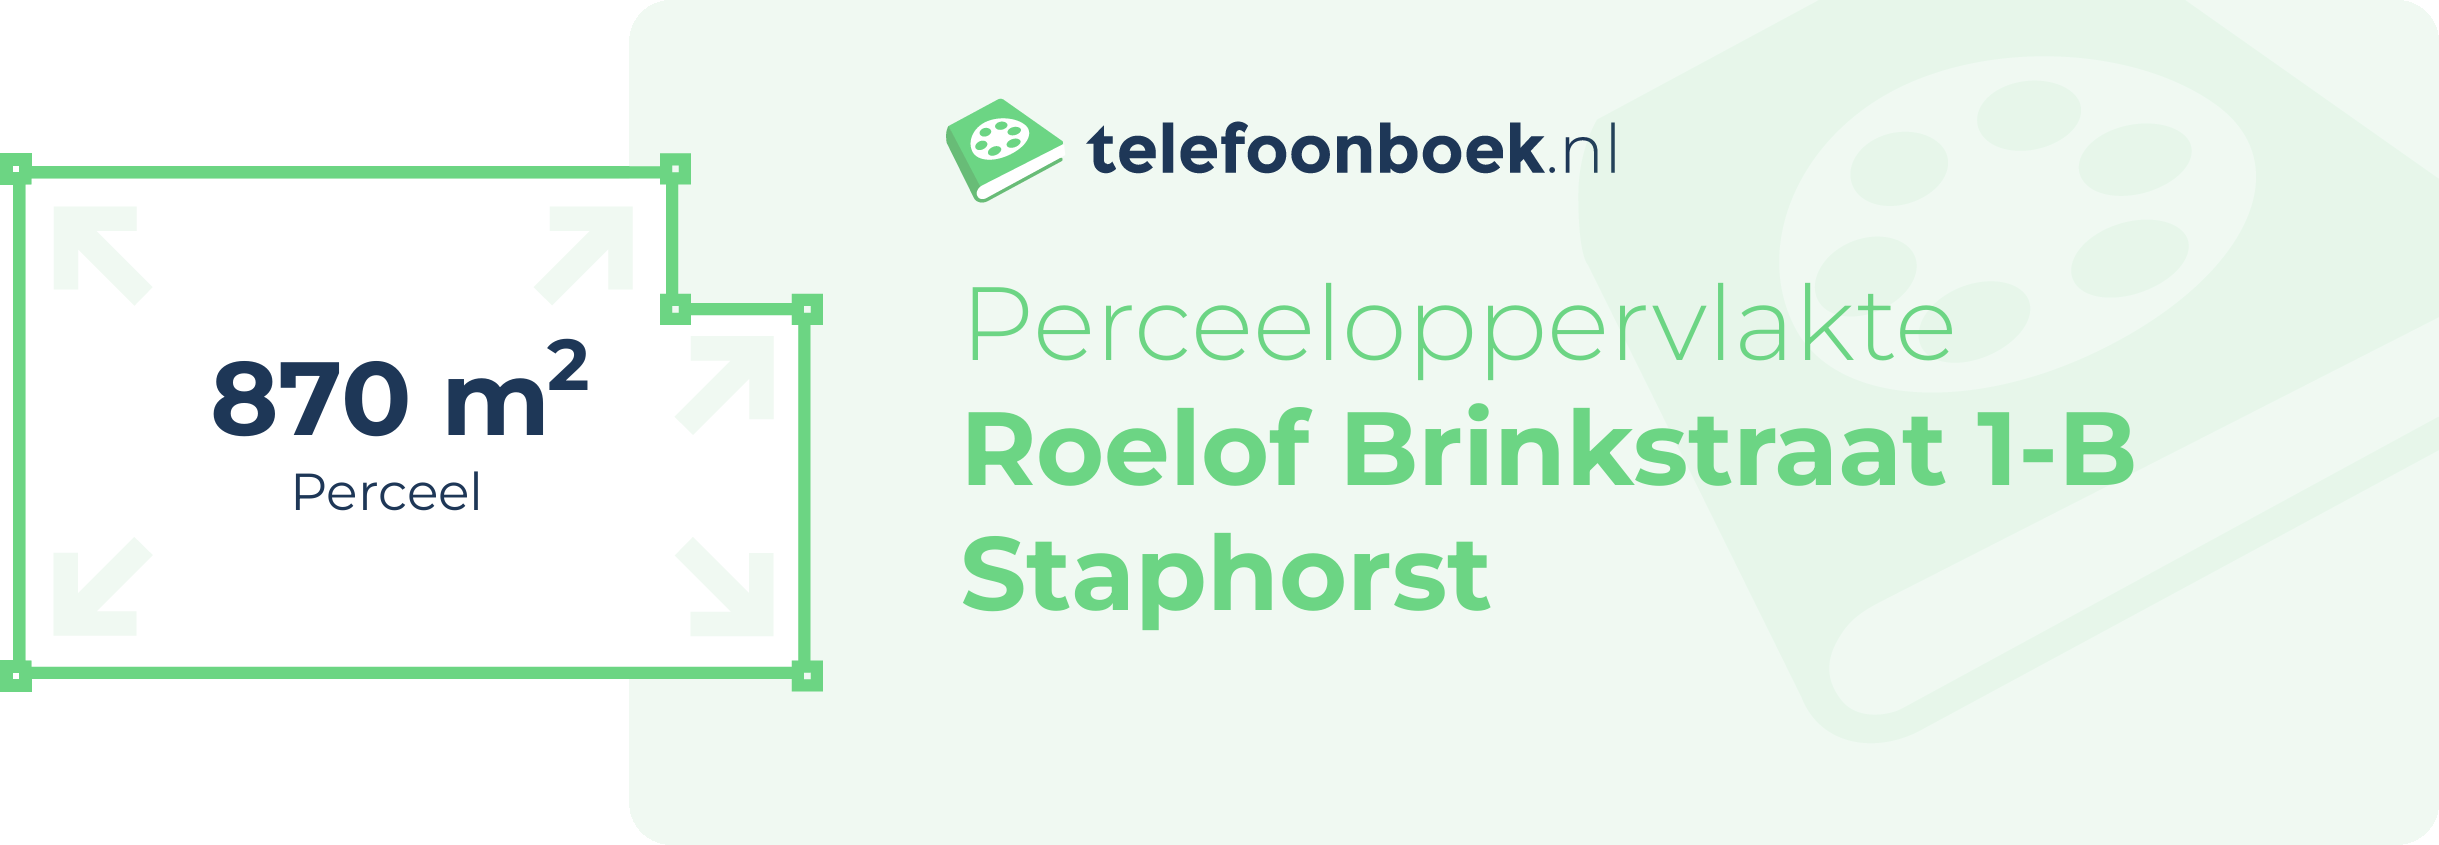 Perceeloppervlakte Roelof Brinkstraat 1-B Staphorst